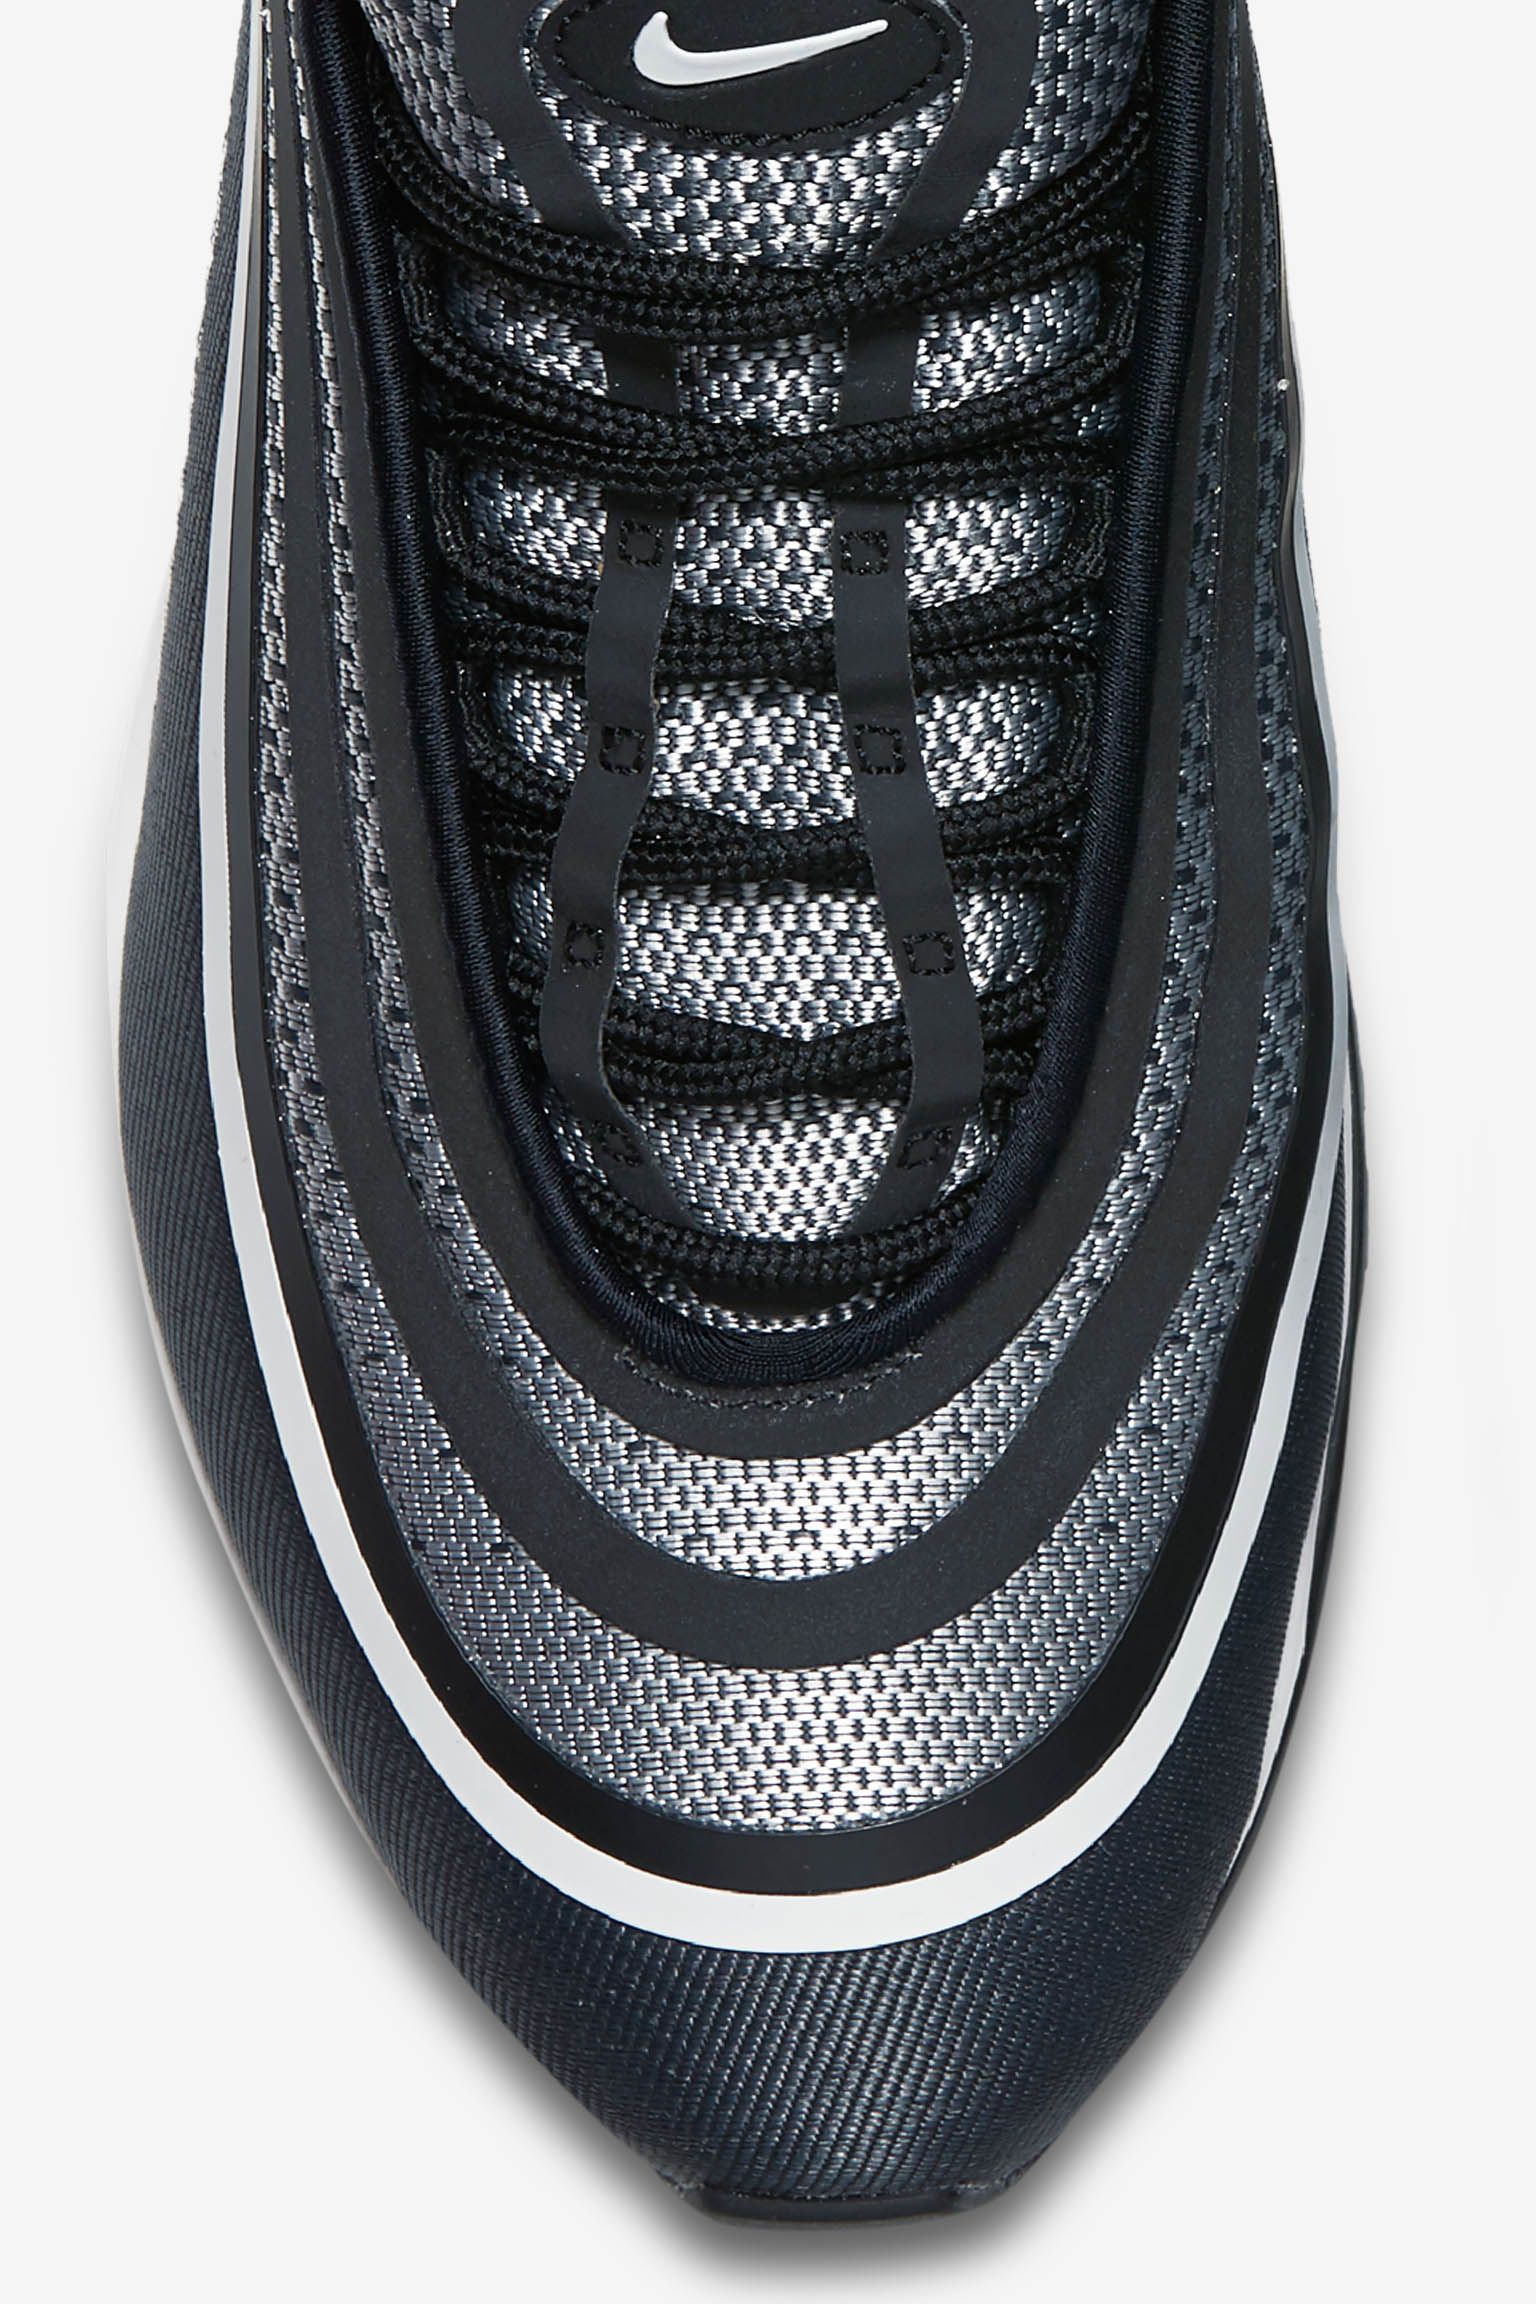 Nike Air Max 97 Ultra '17 'Black 